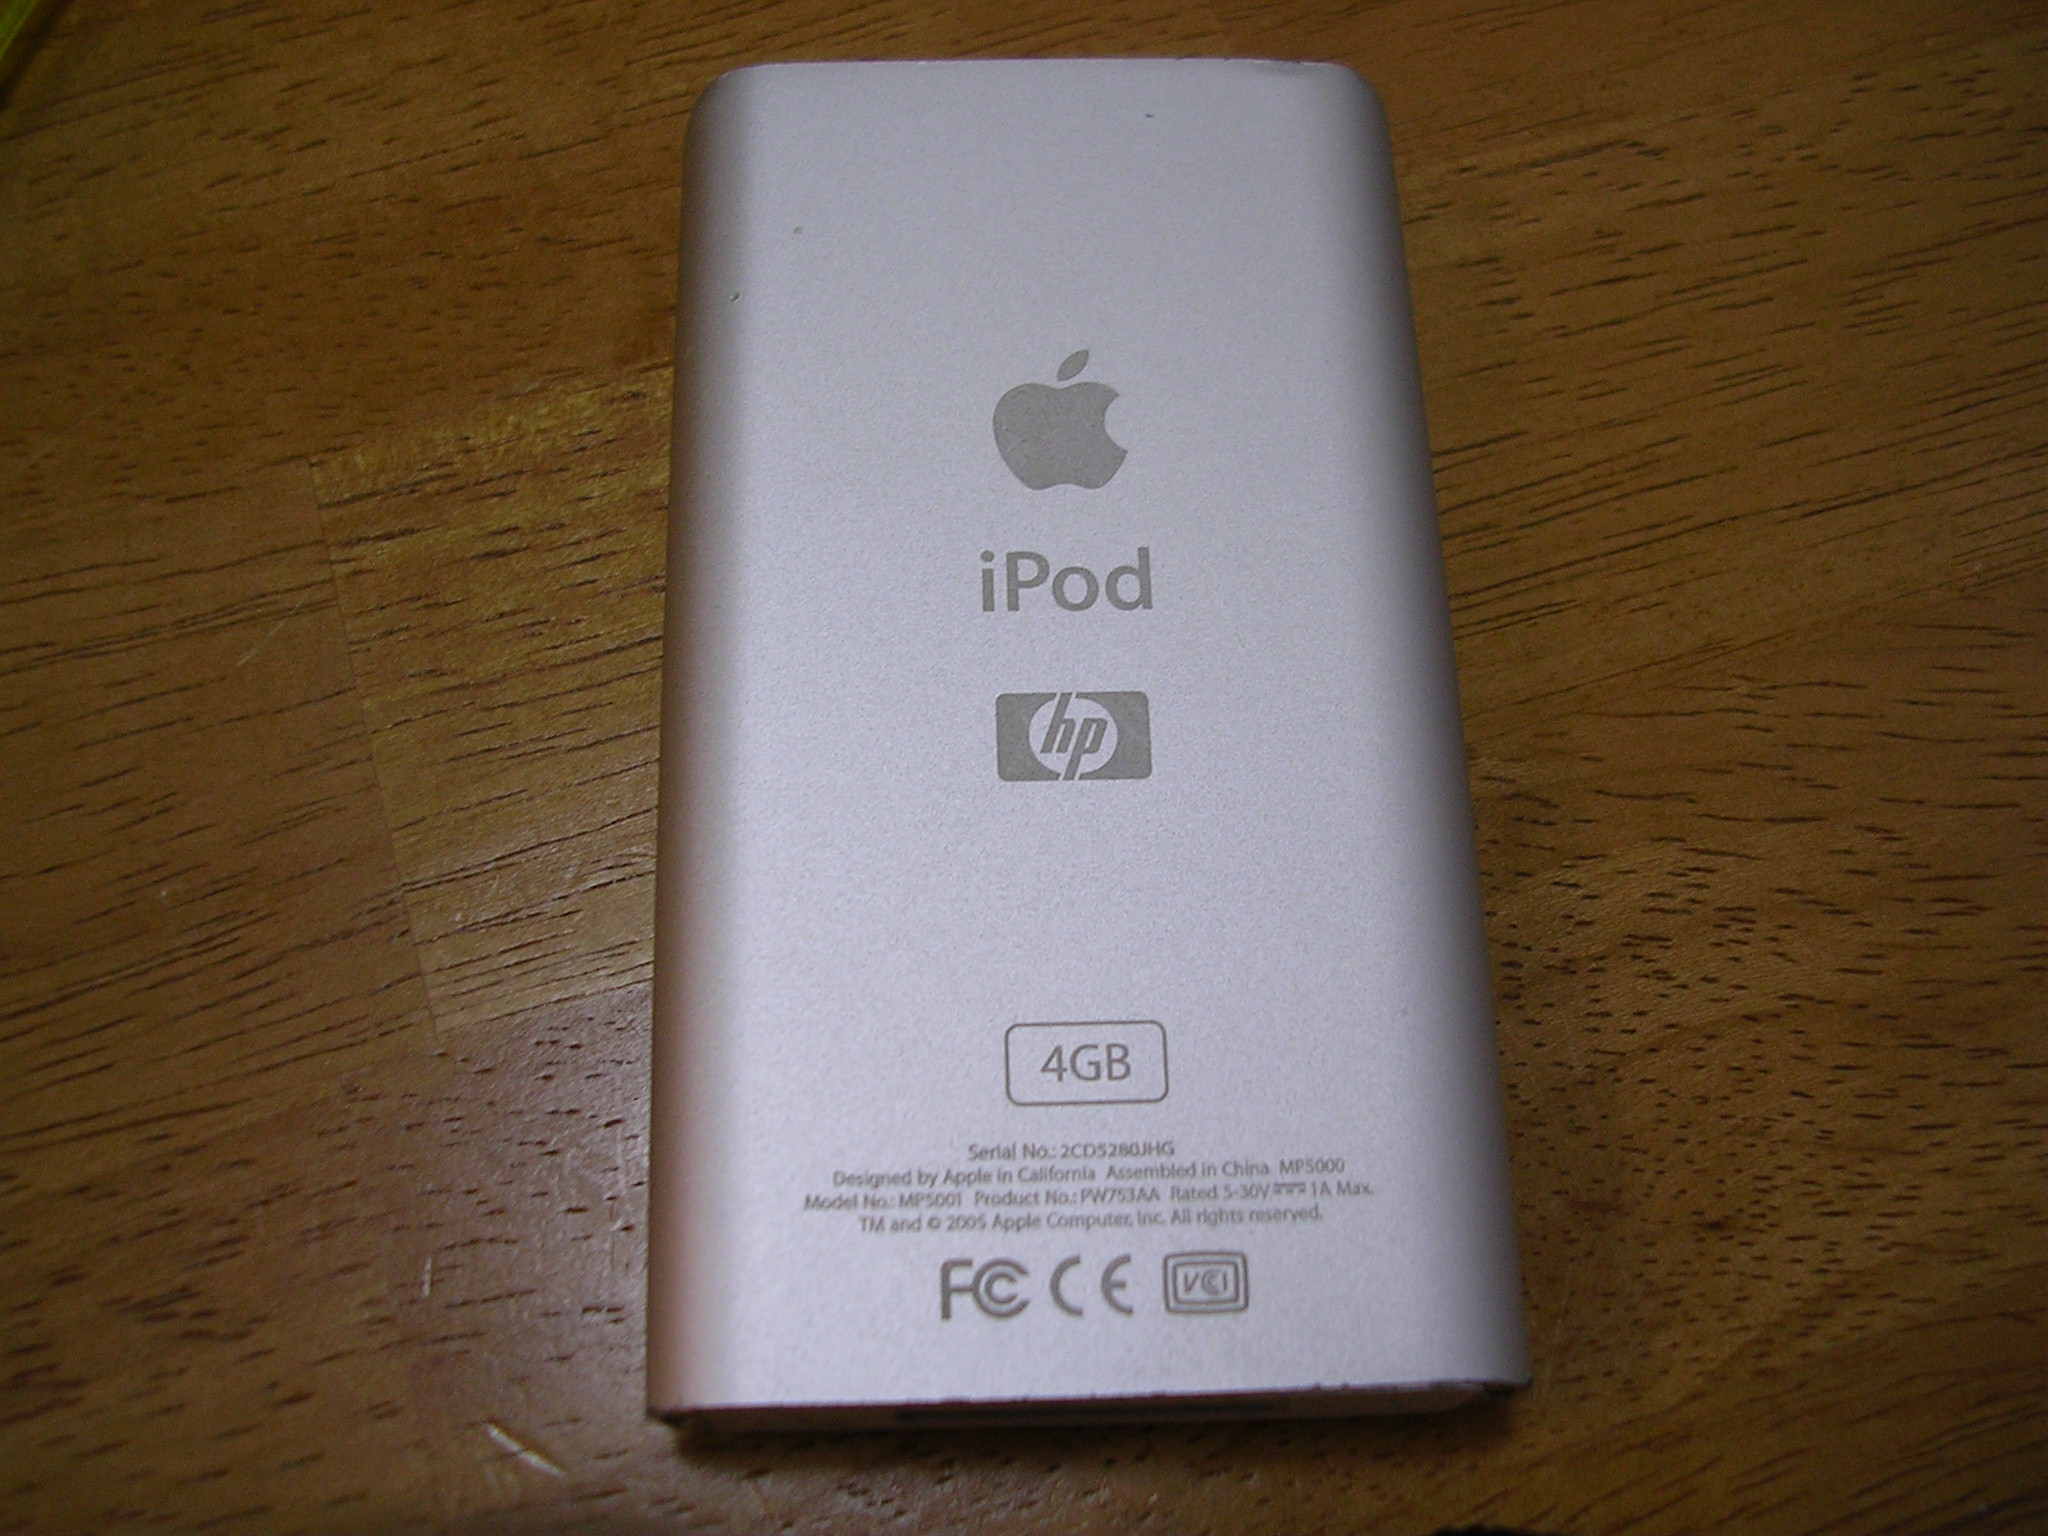 iPod+HP - Wikipedia